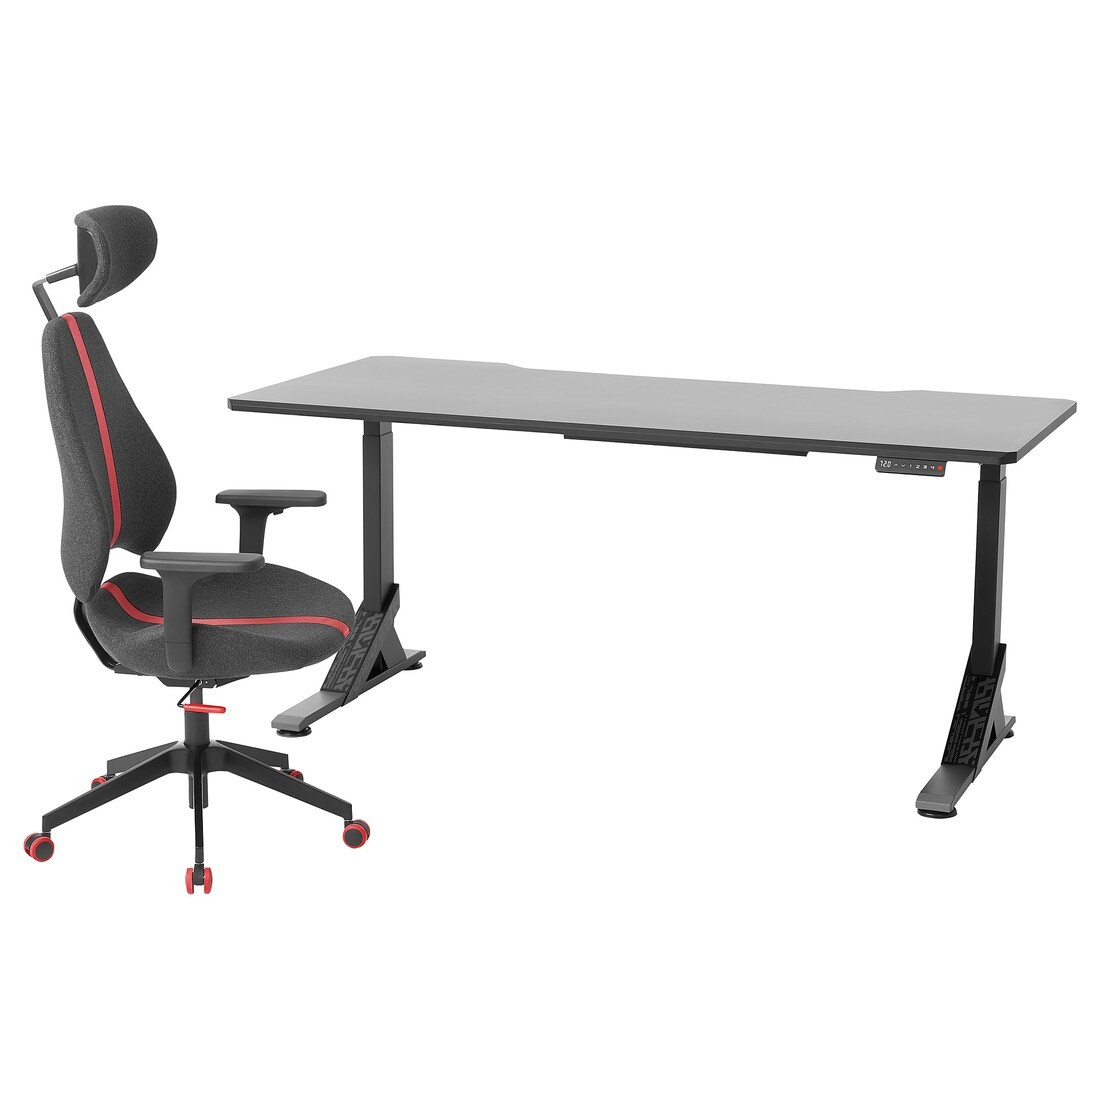 UPPSPEL УППСПЕЛЬ / GRUPPSPEL Геймерский стол и стул, черный / серый, 180x80 cм